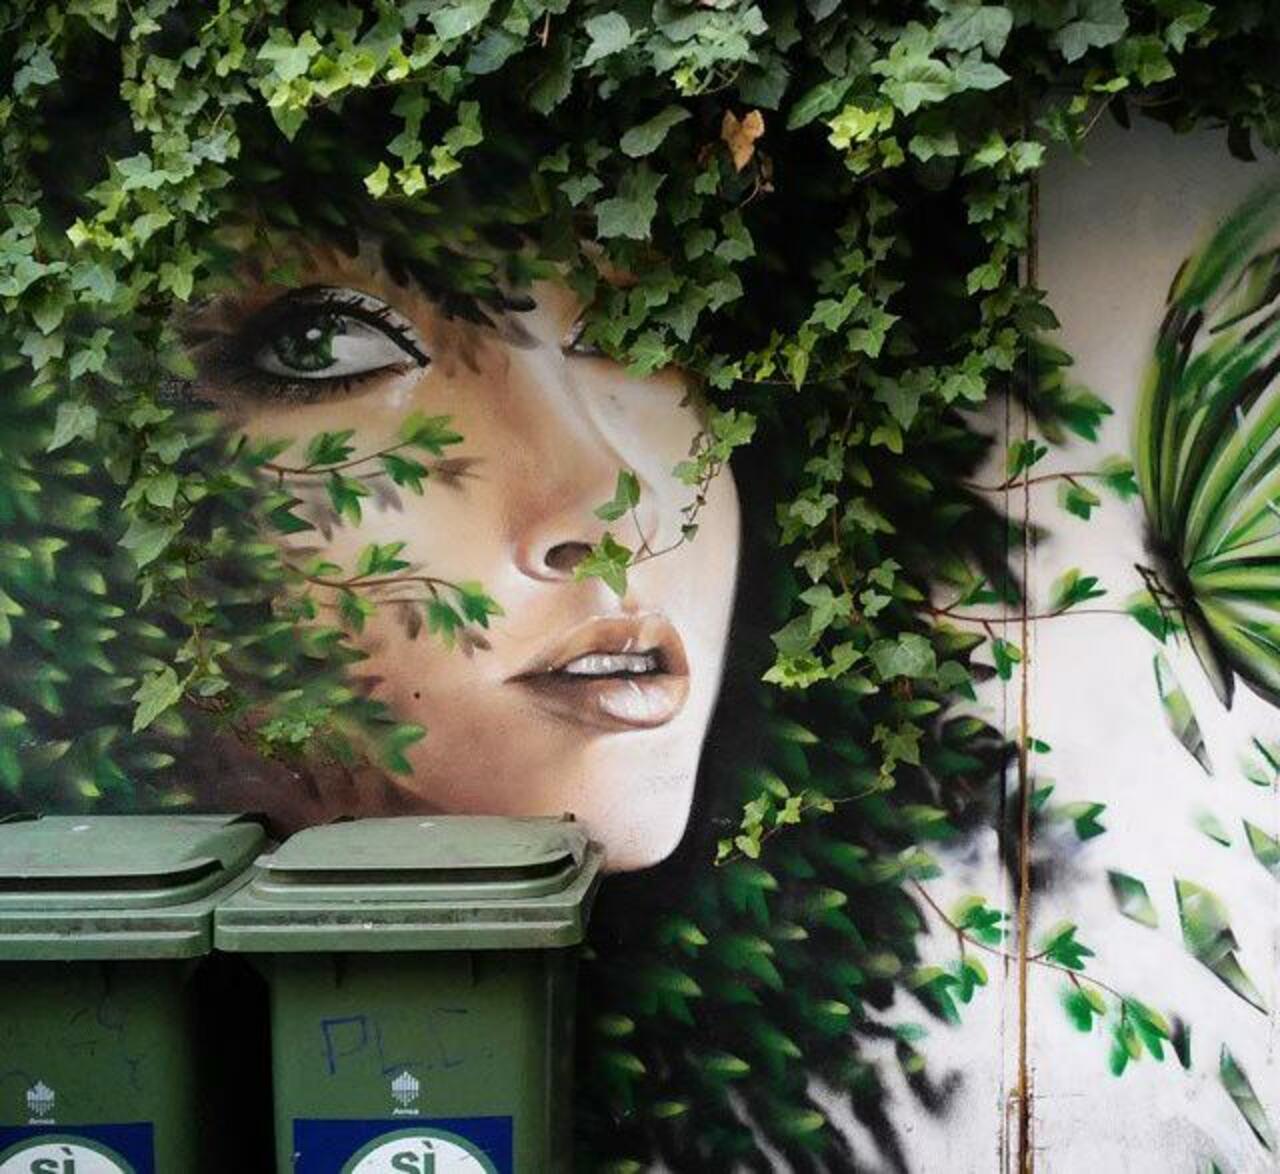 When Street Art meets nature by Dasxa in Isola, Millan 

#art #arte #graffiti #streetart http://t.co/5kdEsvMCyw